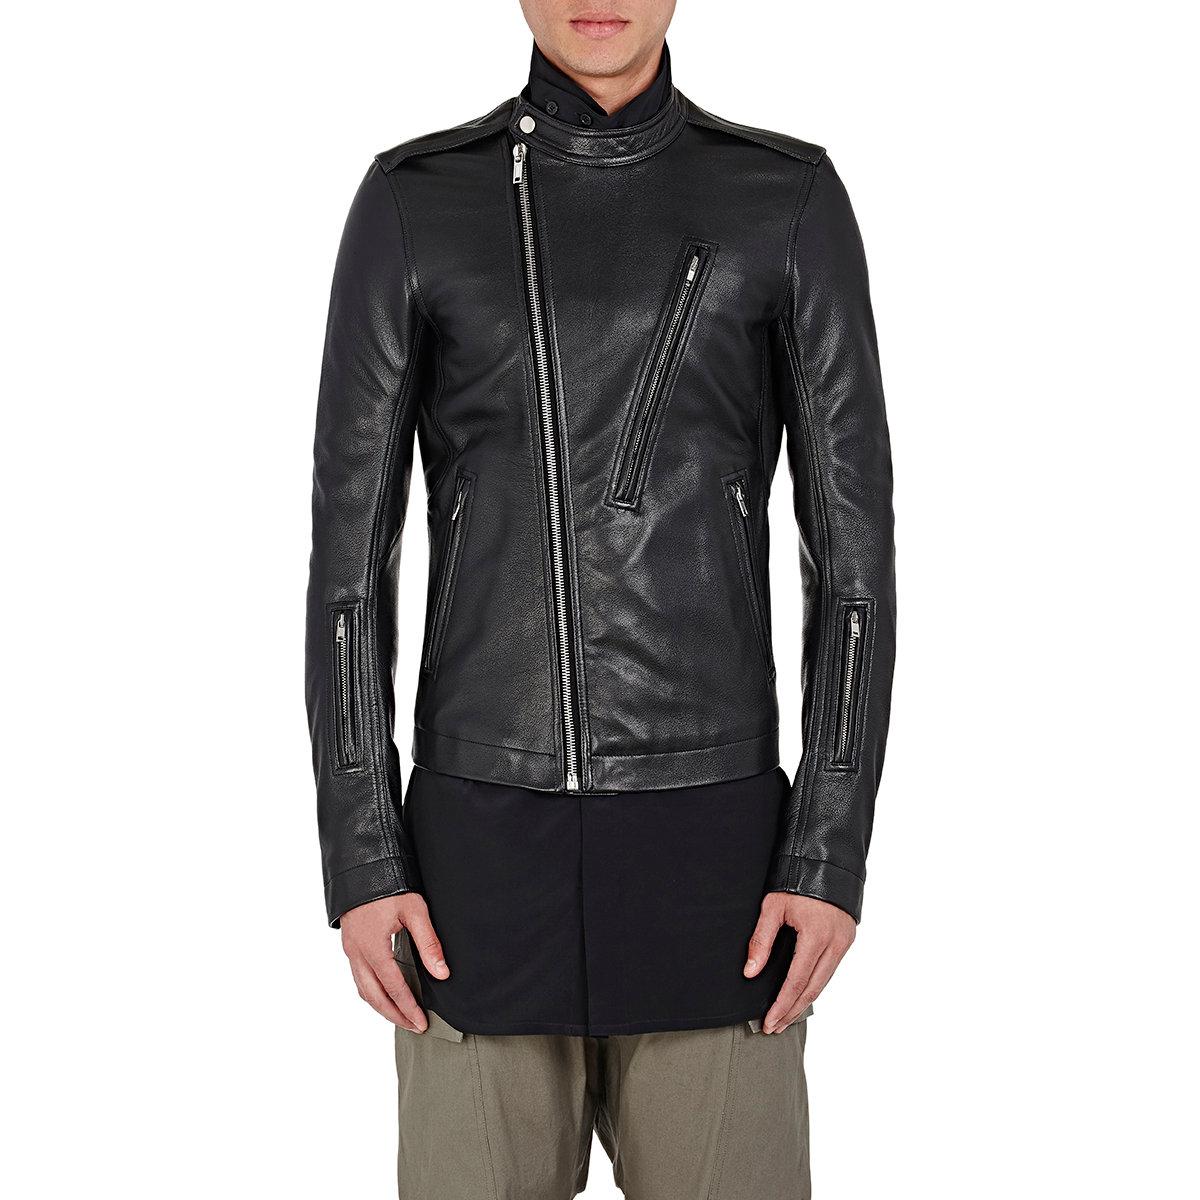 Rick Owens Cyclops Leather Biker Moto Jacket in Black for Men - Lyst